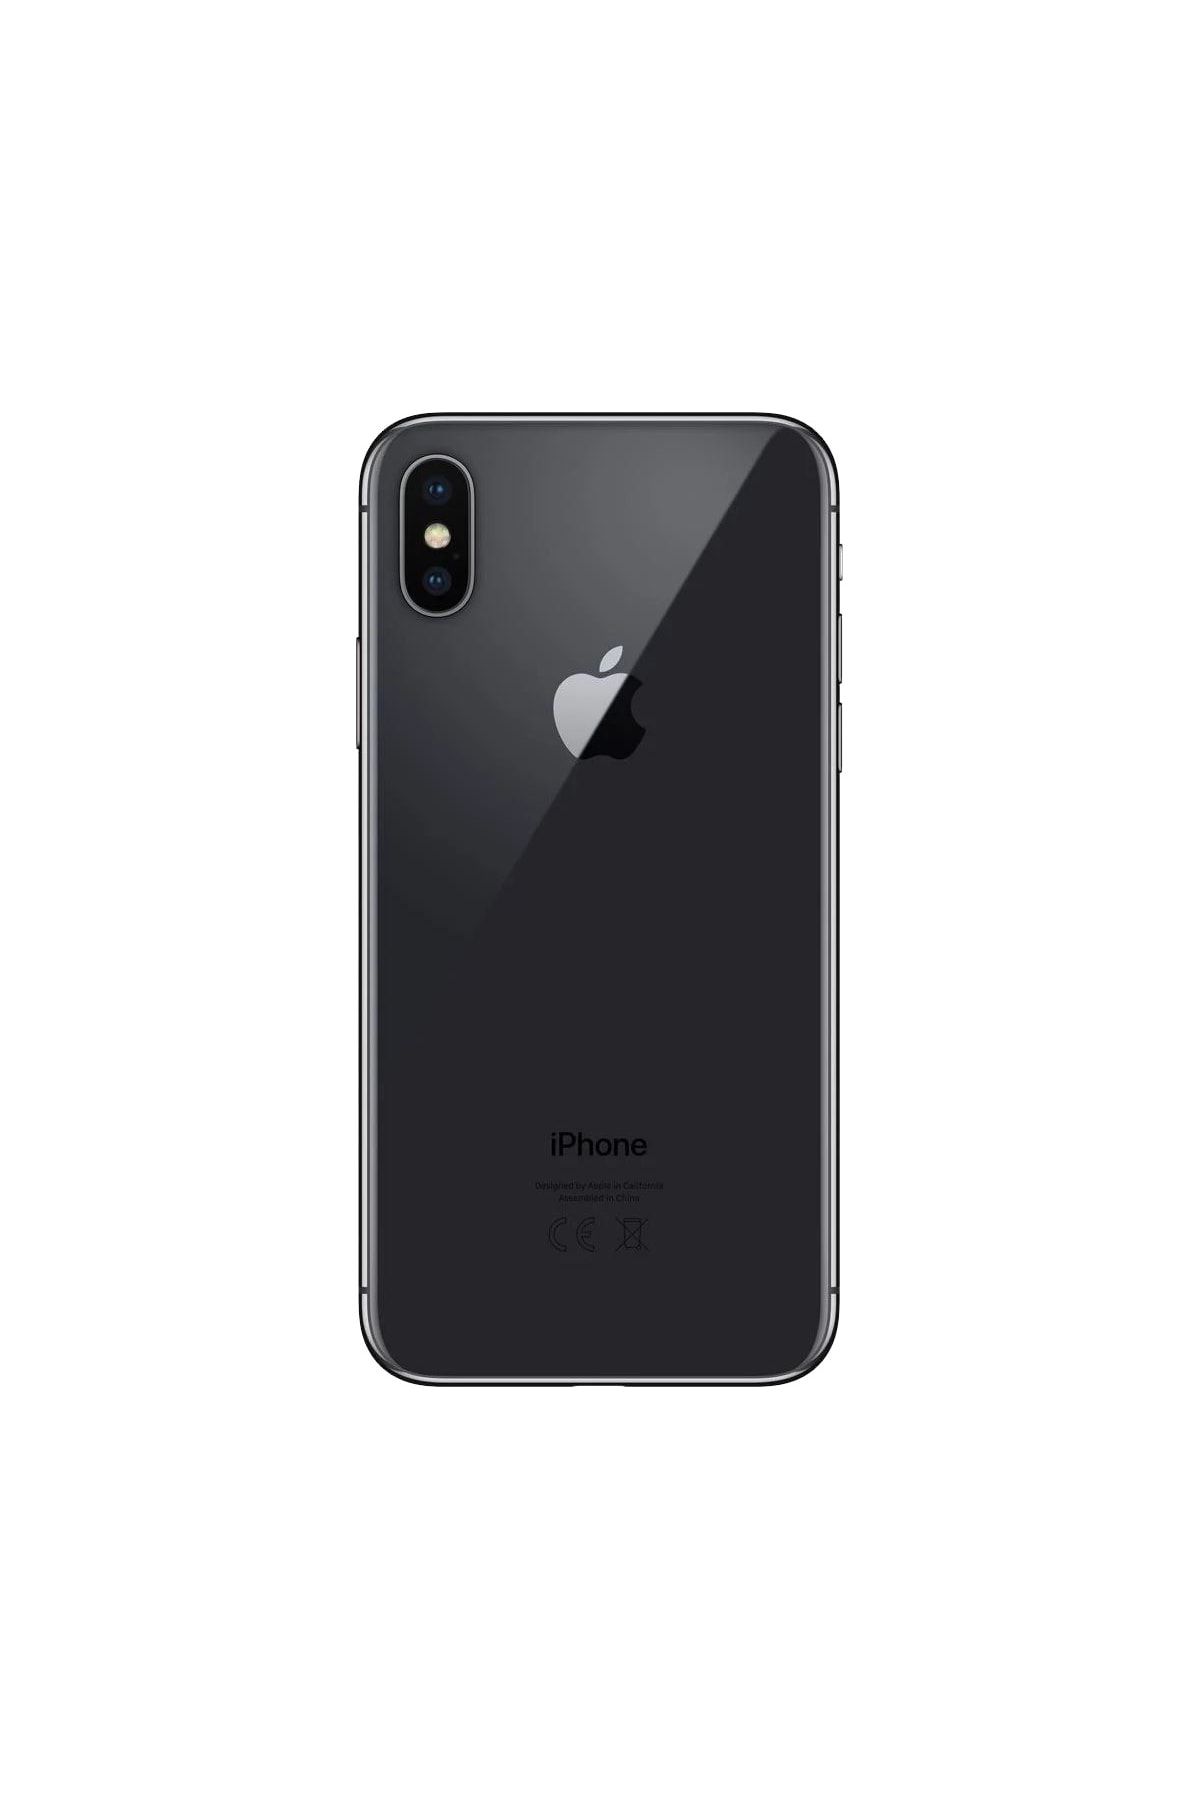 Apple Yenilenmiş iPhone X 64 GB Siyah Cep Telefonu (12 Ay Garantili) - C Kalite